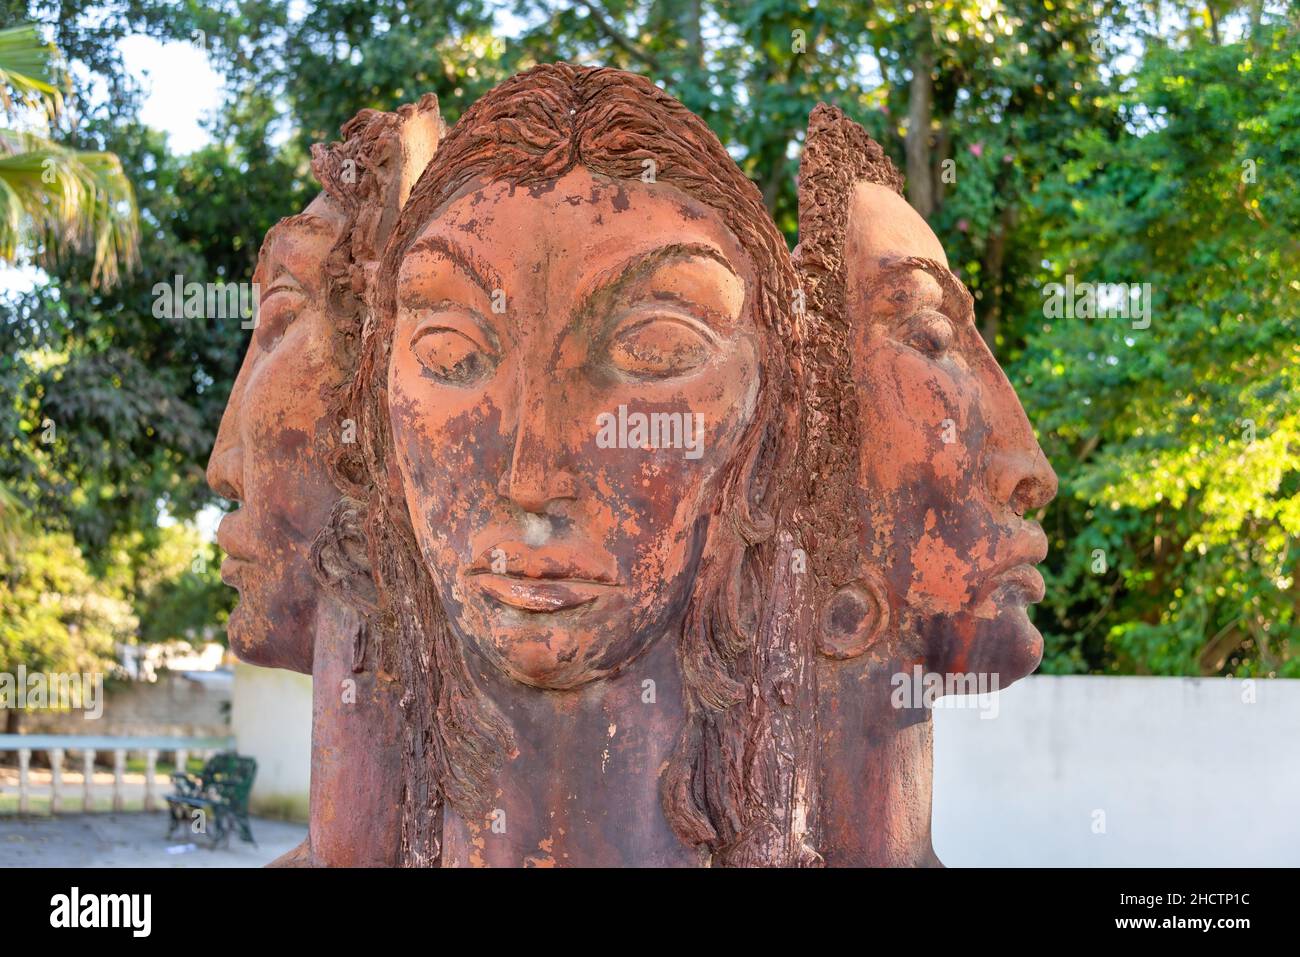 Cuban culture art sculpture with aboriginal faces seen on a small parquet. Jan. 1, 2021 Stock Photo